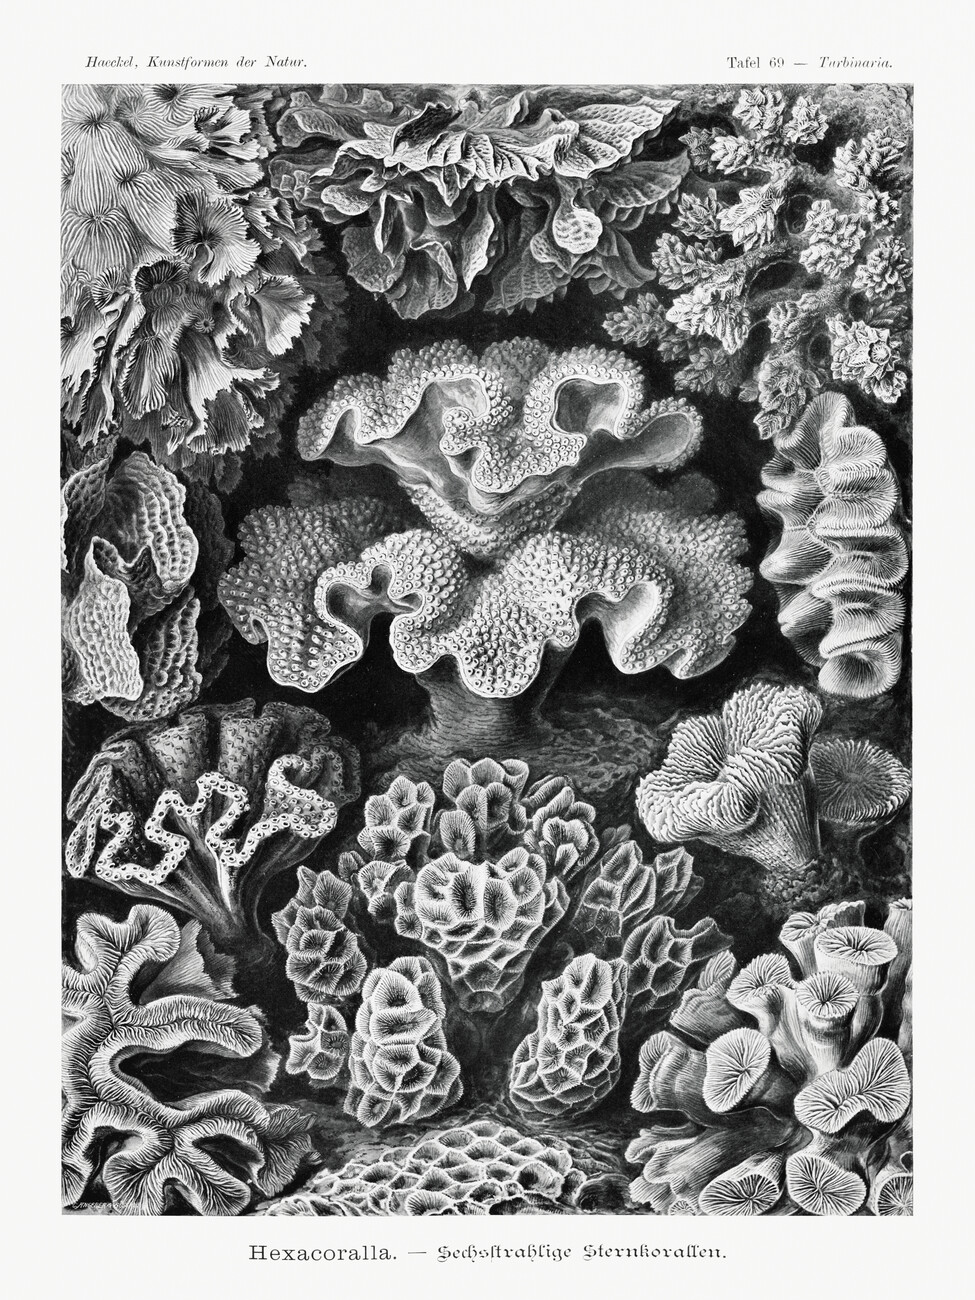 Hexacoralla–Sechsstrahlige Sternkorallen (Coral Reef / Academia) - Ernst  Haeckel | Reproductions de peintures célèbres | Europosters